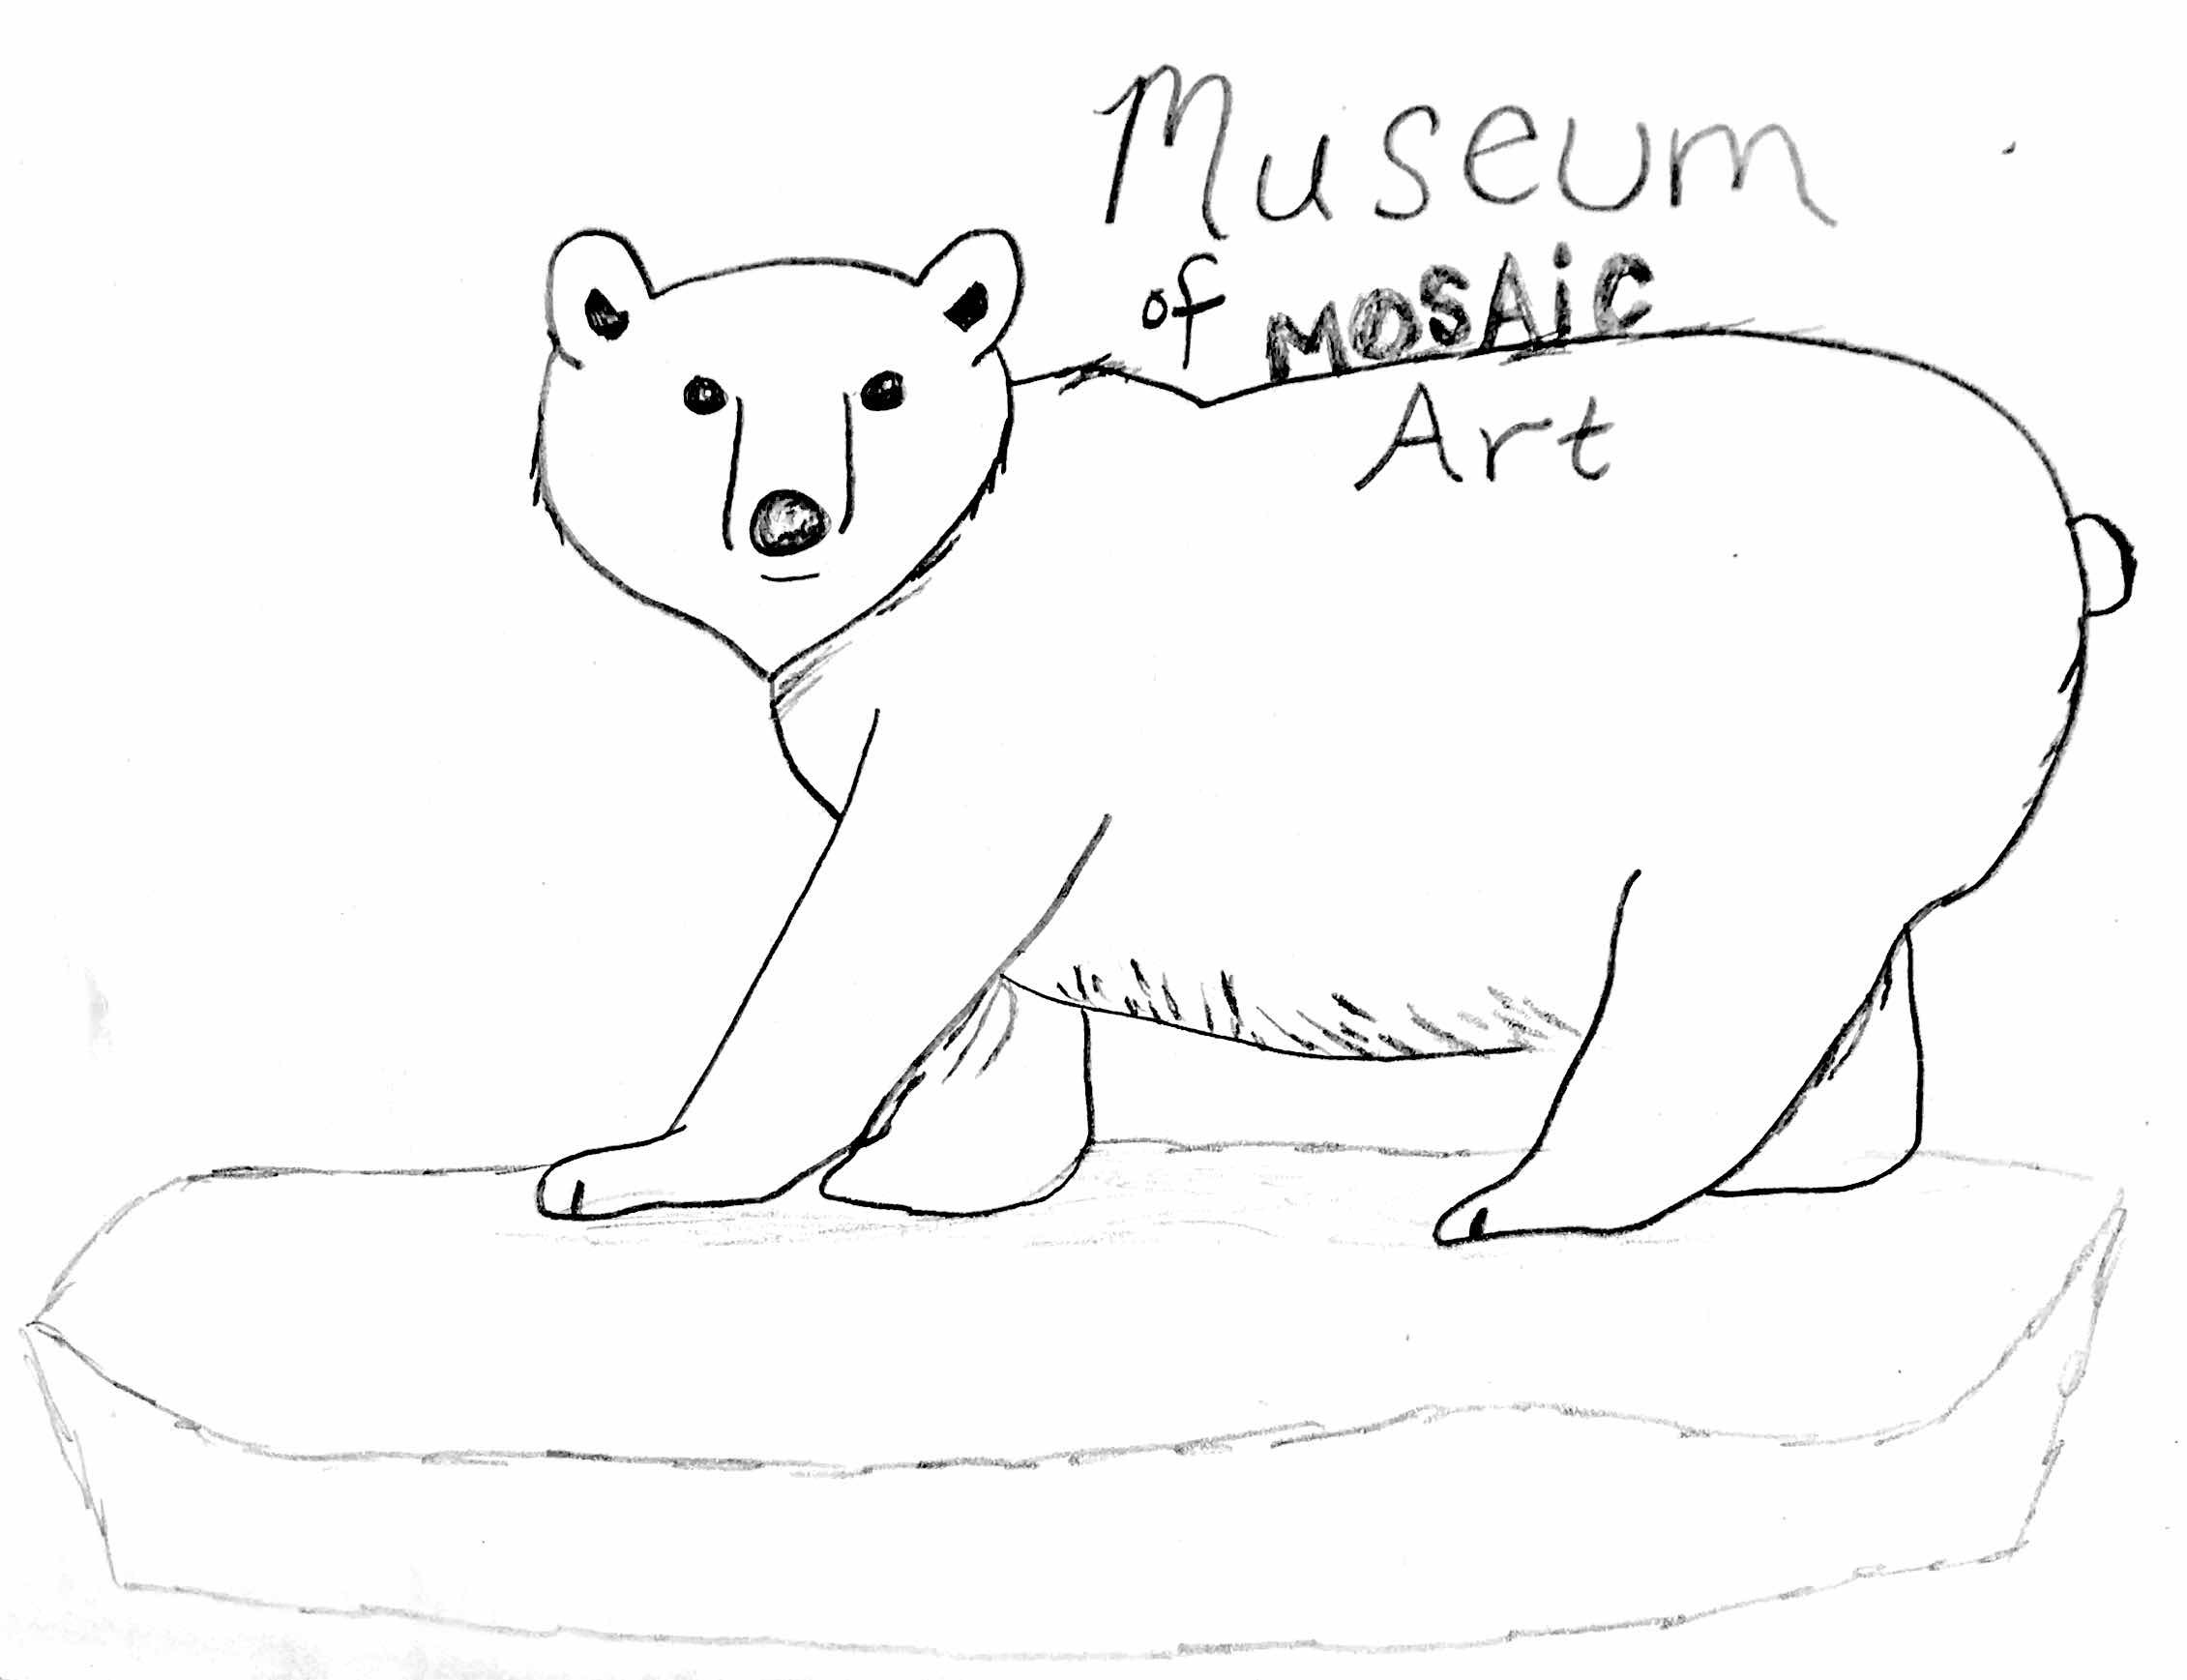 polar bear drawing